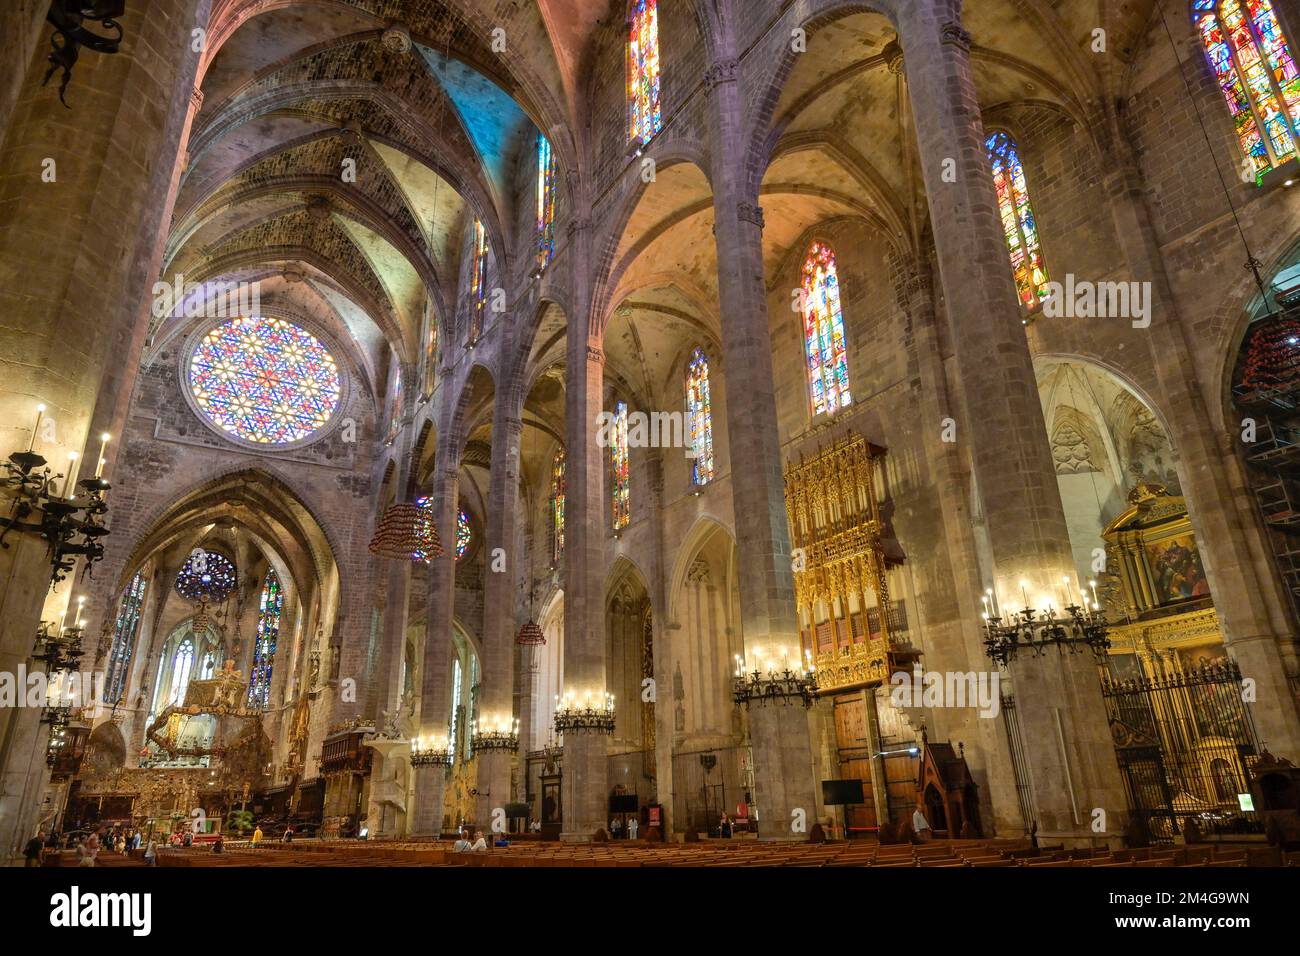 Hauptschiff, Innenansicht der Kathedrale, Catedral de Palma de Mallorca, Palma, Mallorca, Spanien Stock Photo